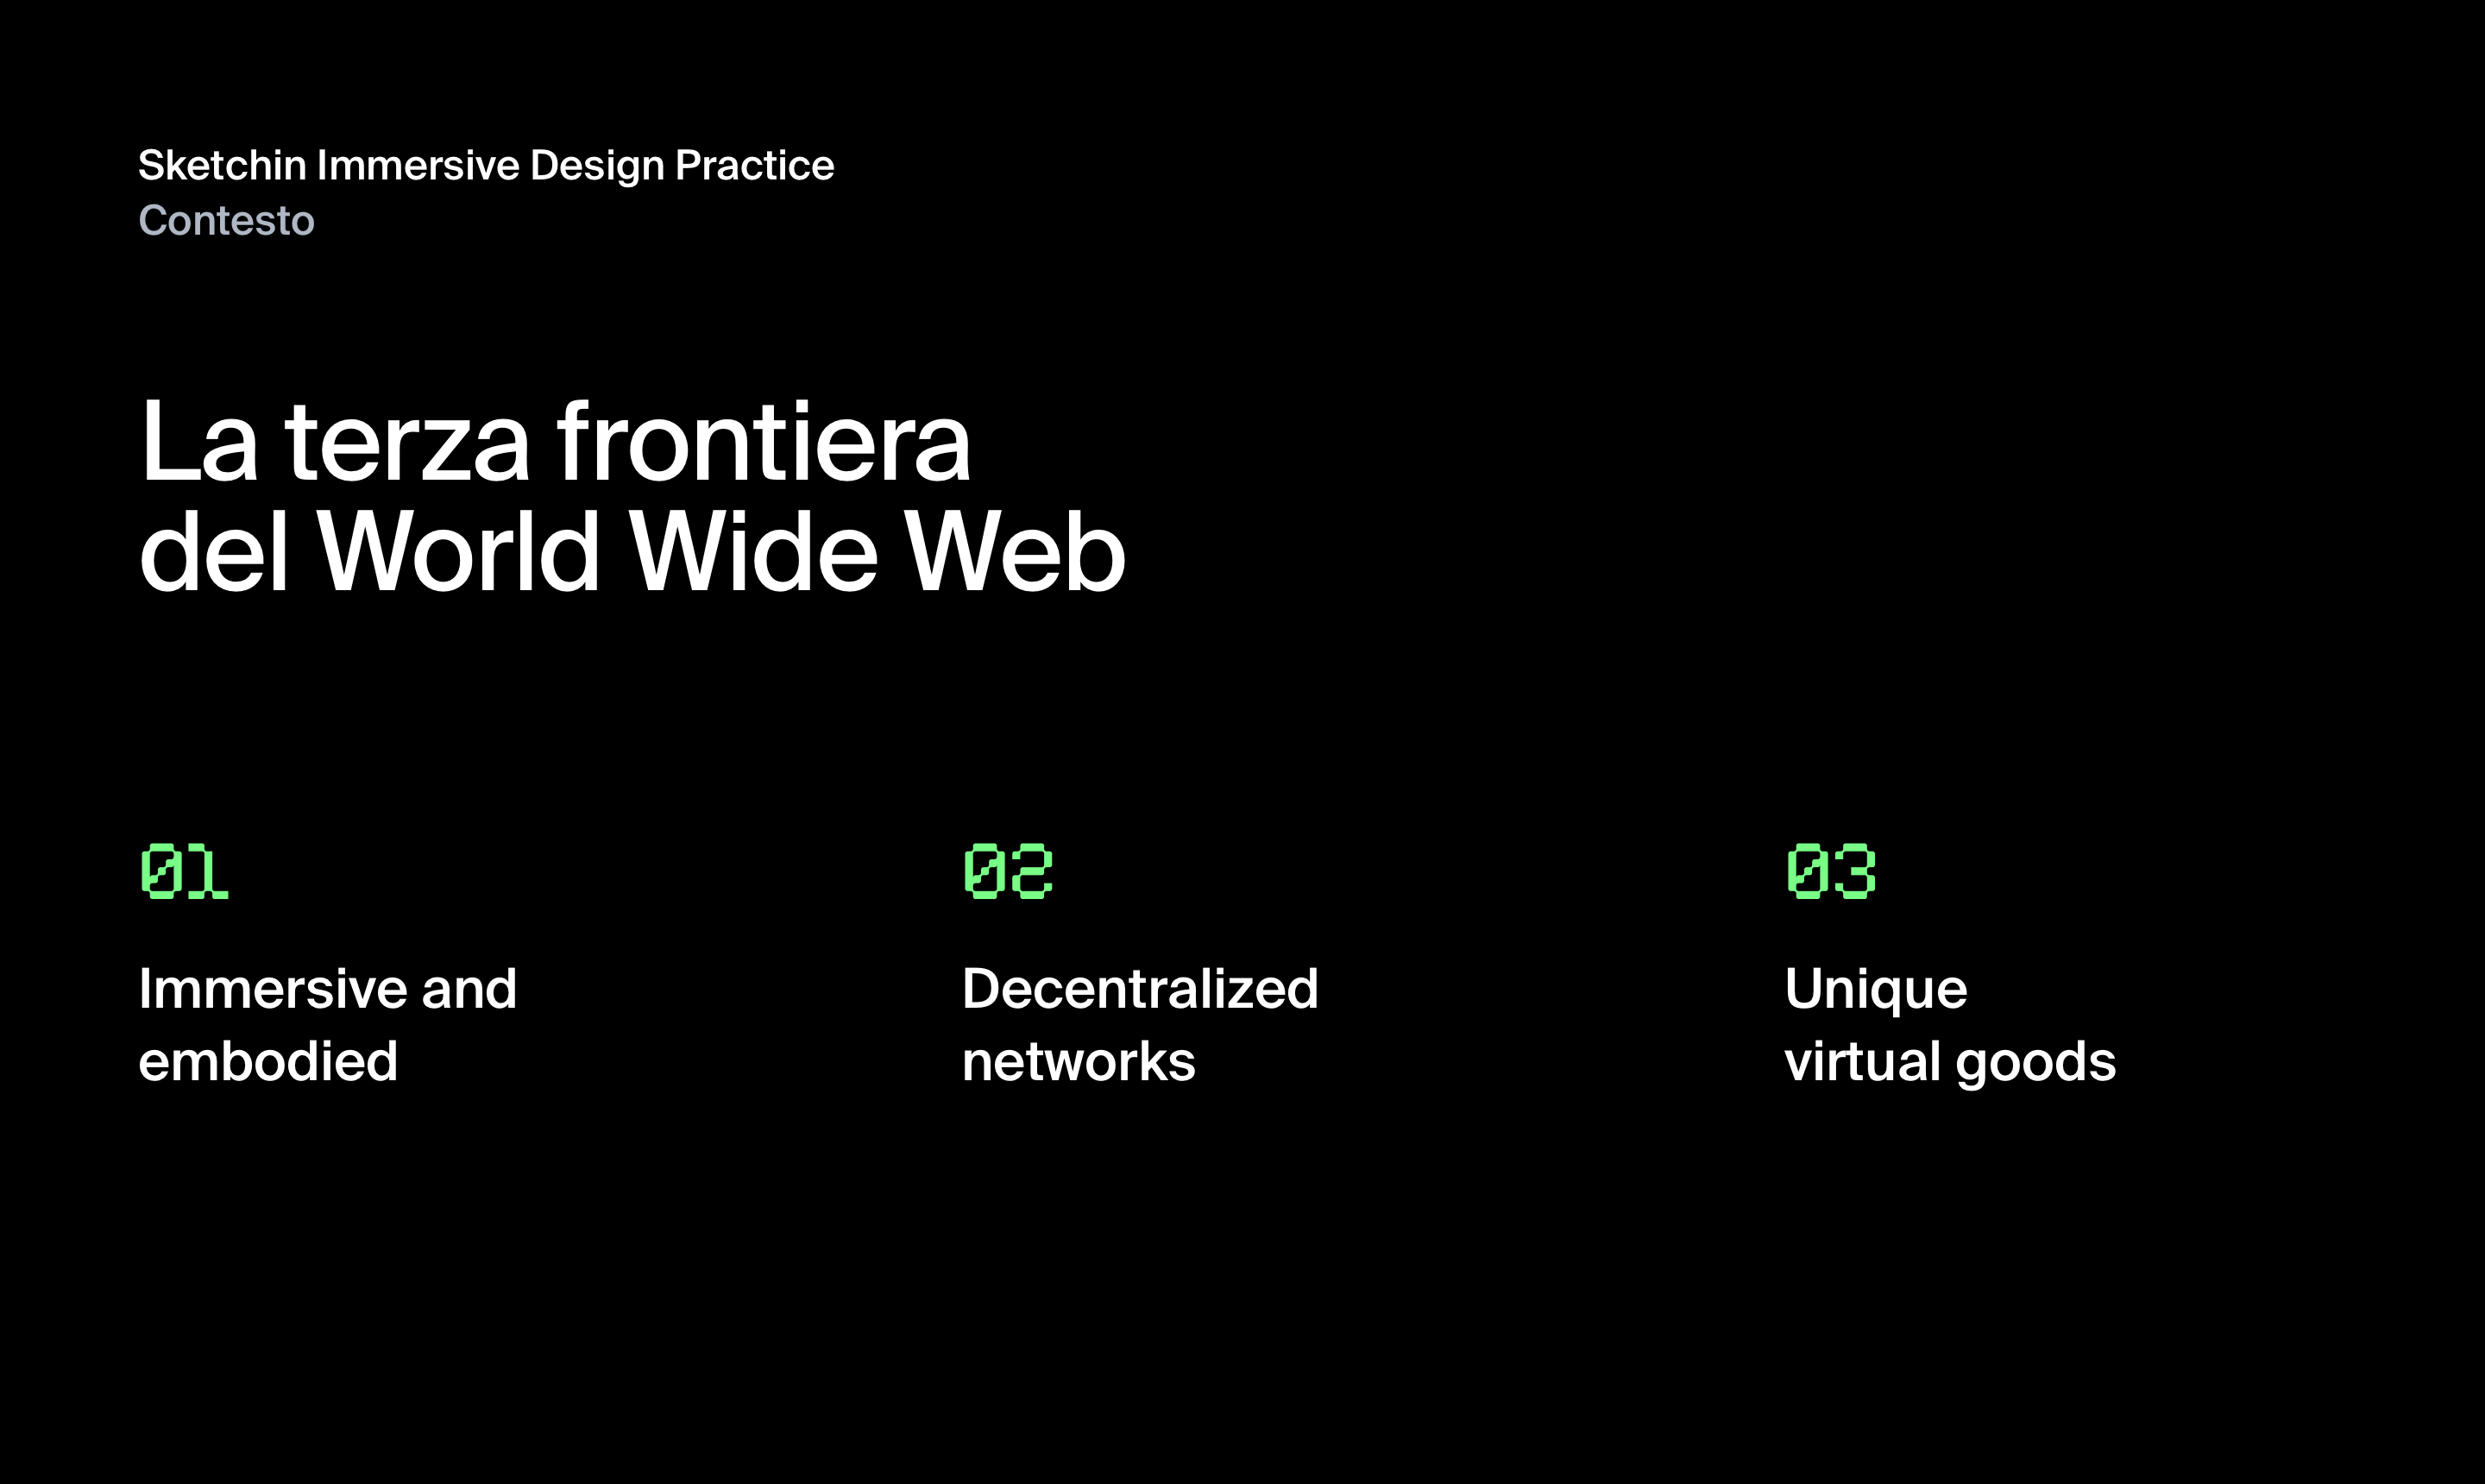 Sketchin Immersive Design Practice - la terza frontiera del world wide web: Immersive and embodied, decentralized  networks, unique virtual goods